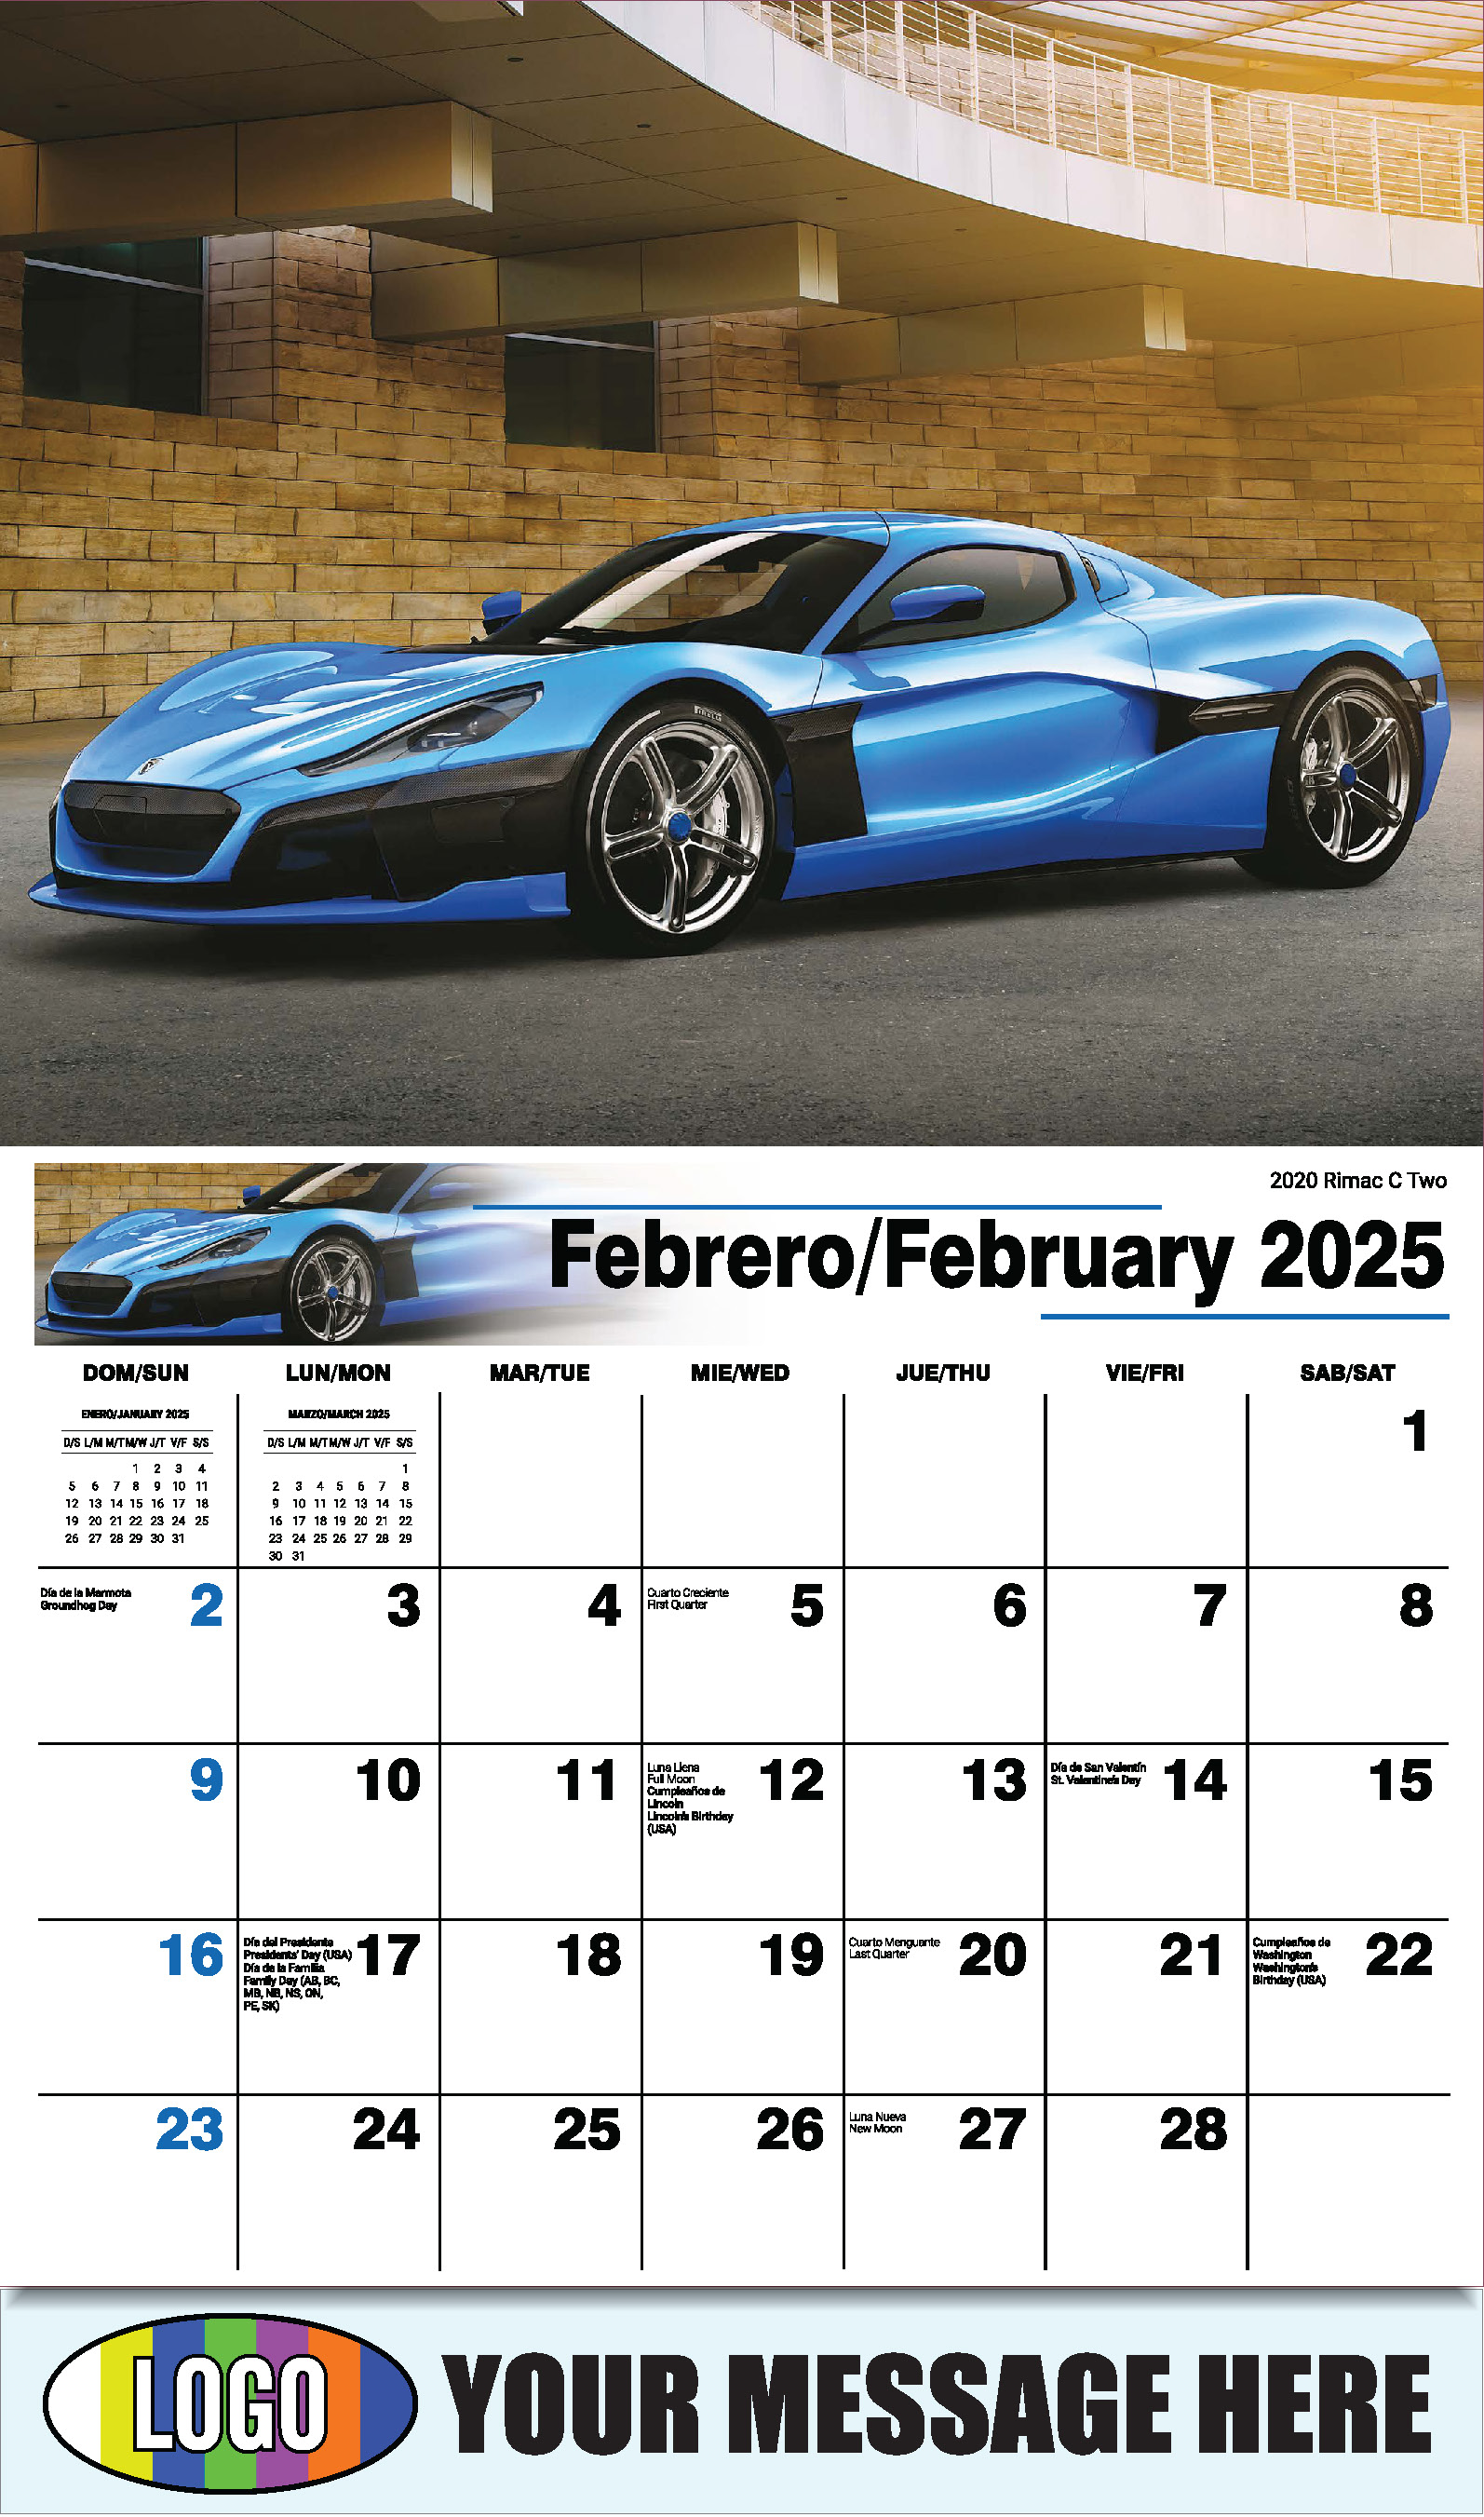 Exotic Cars 2025 Bilingual Automotive Business Promotional Calendar - February